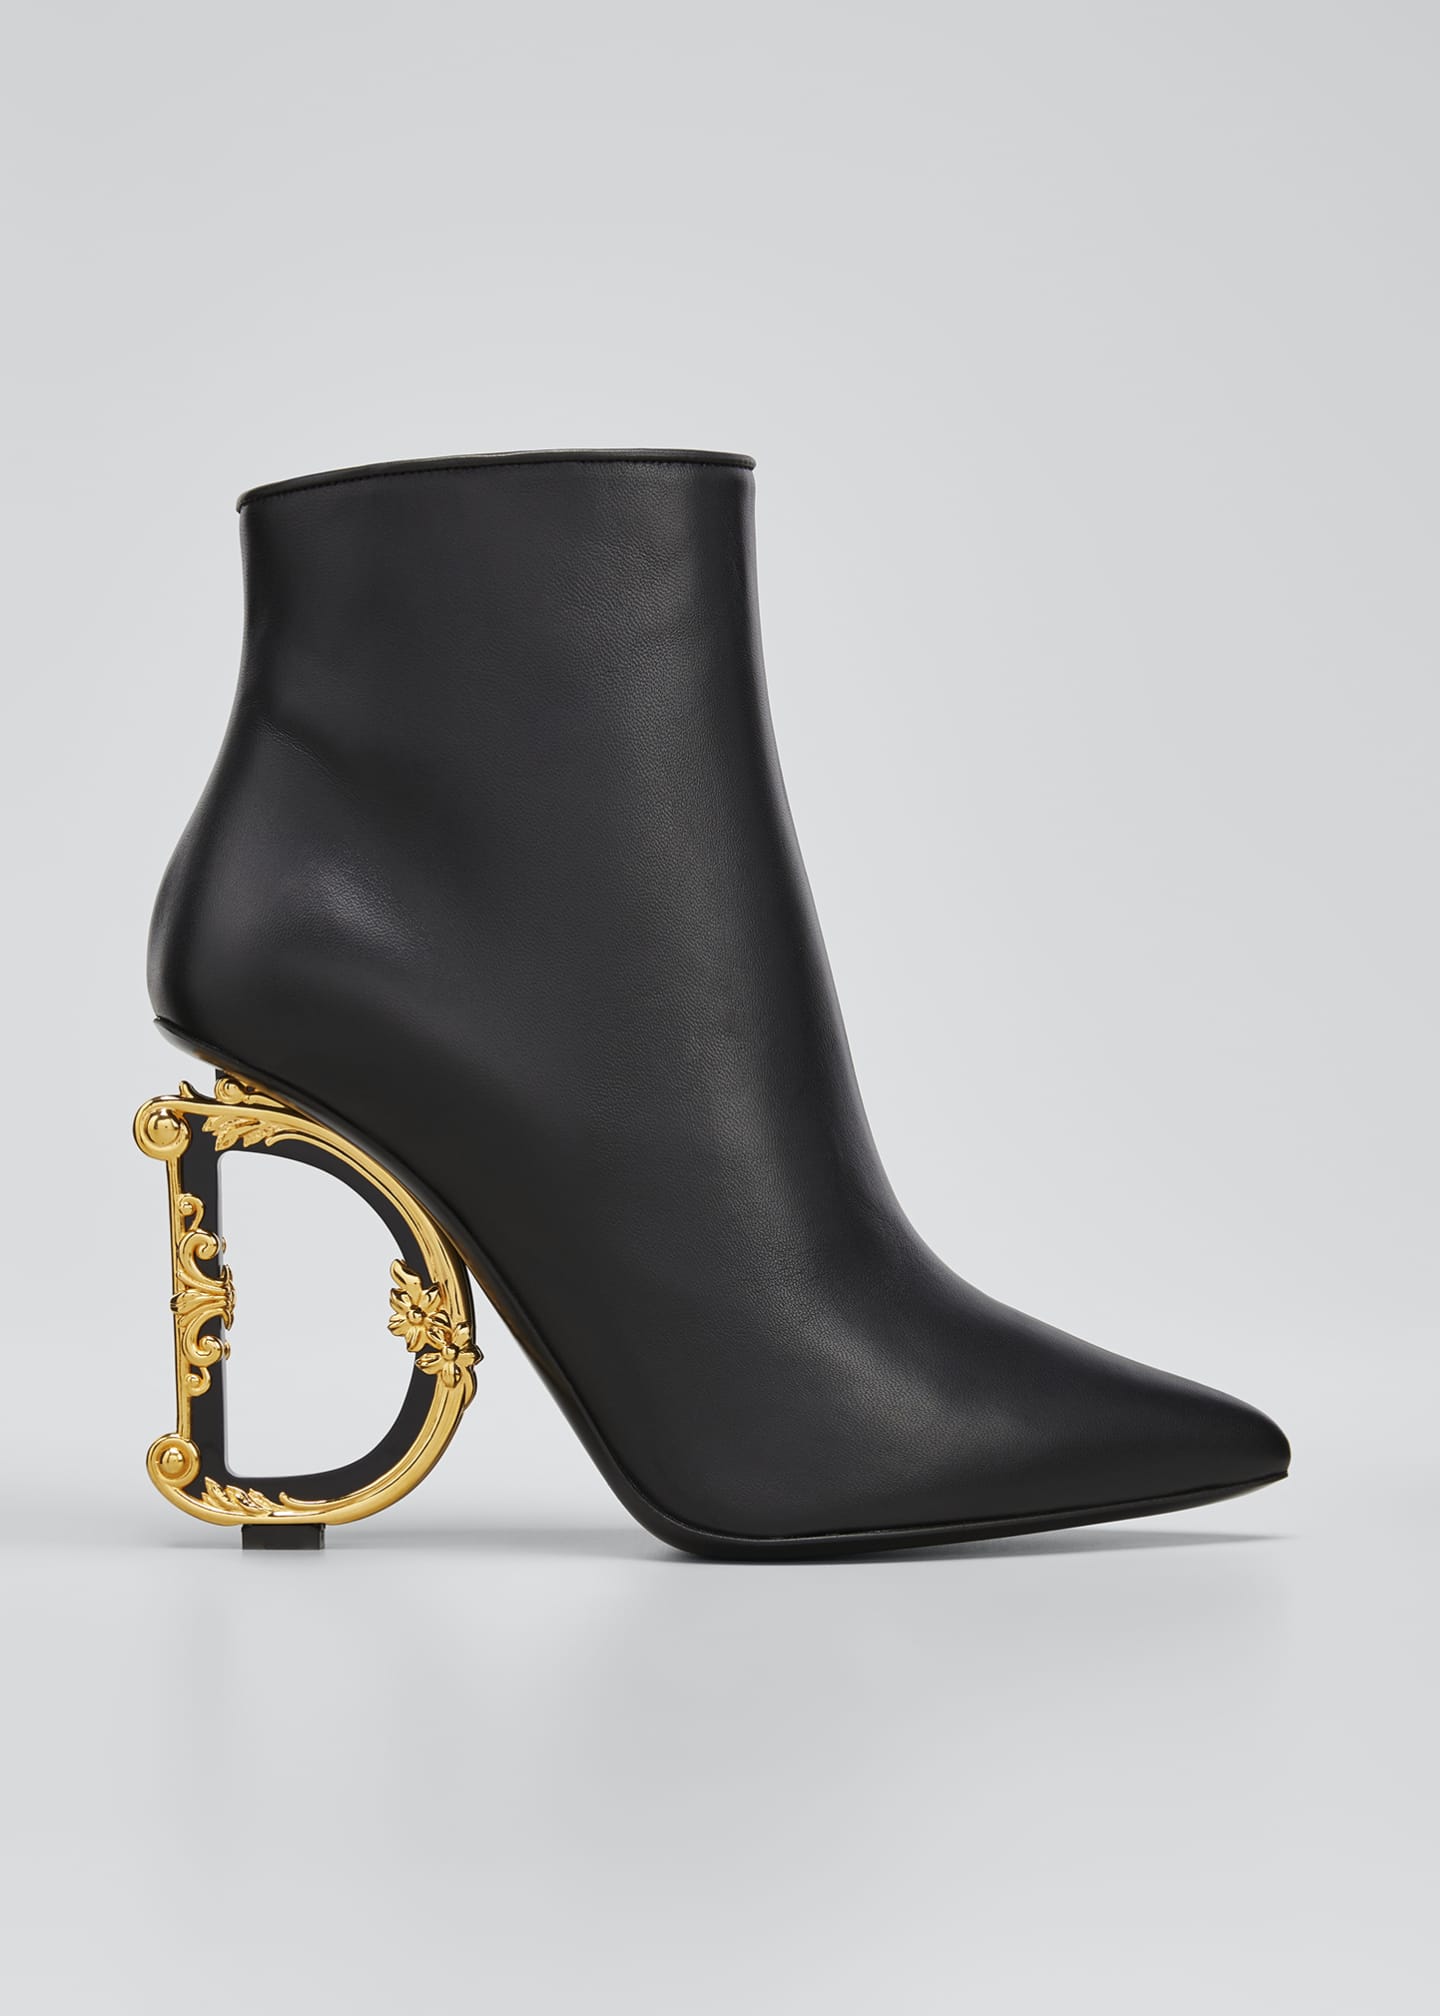 dolce and gabbana logo heels